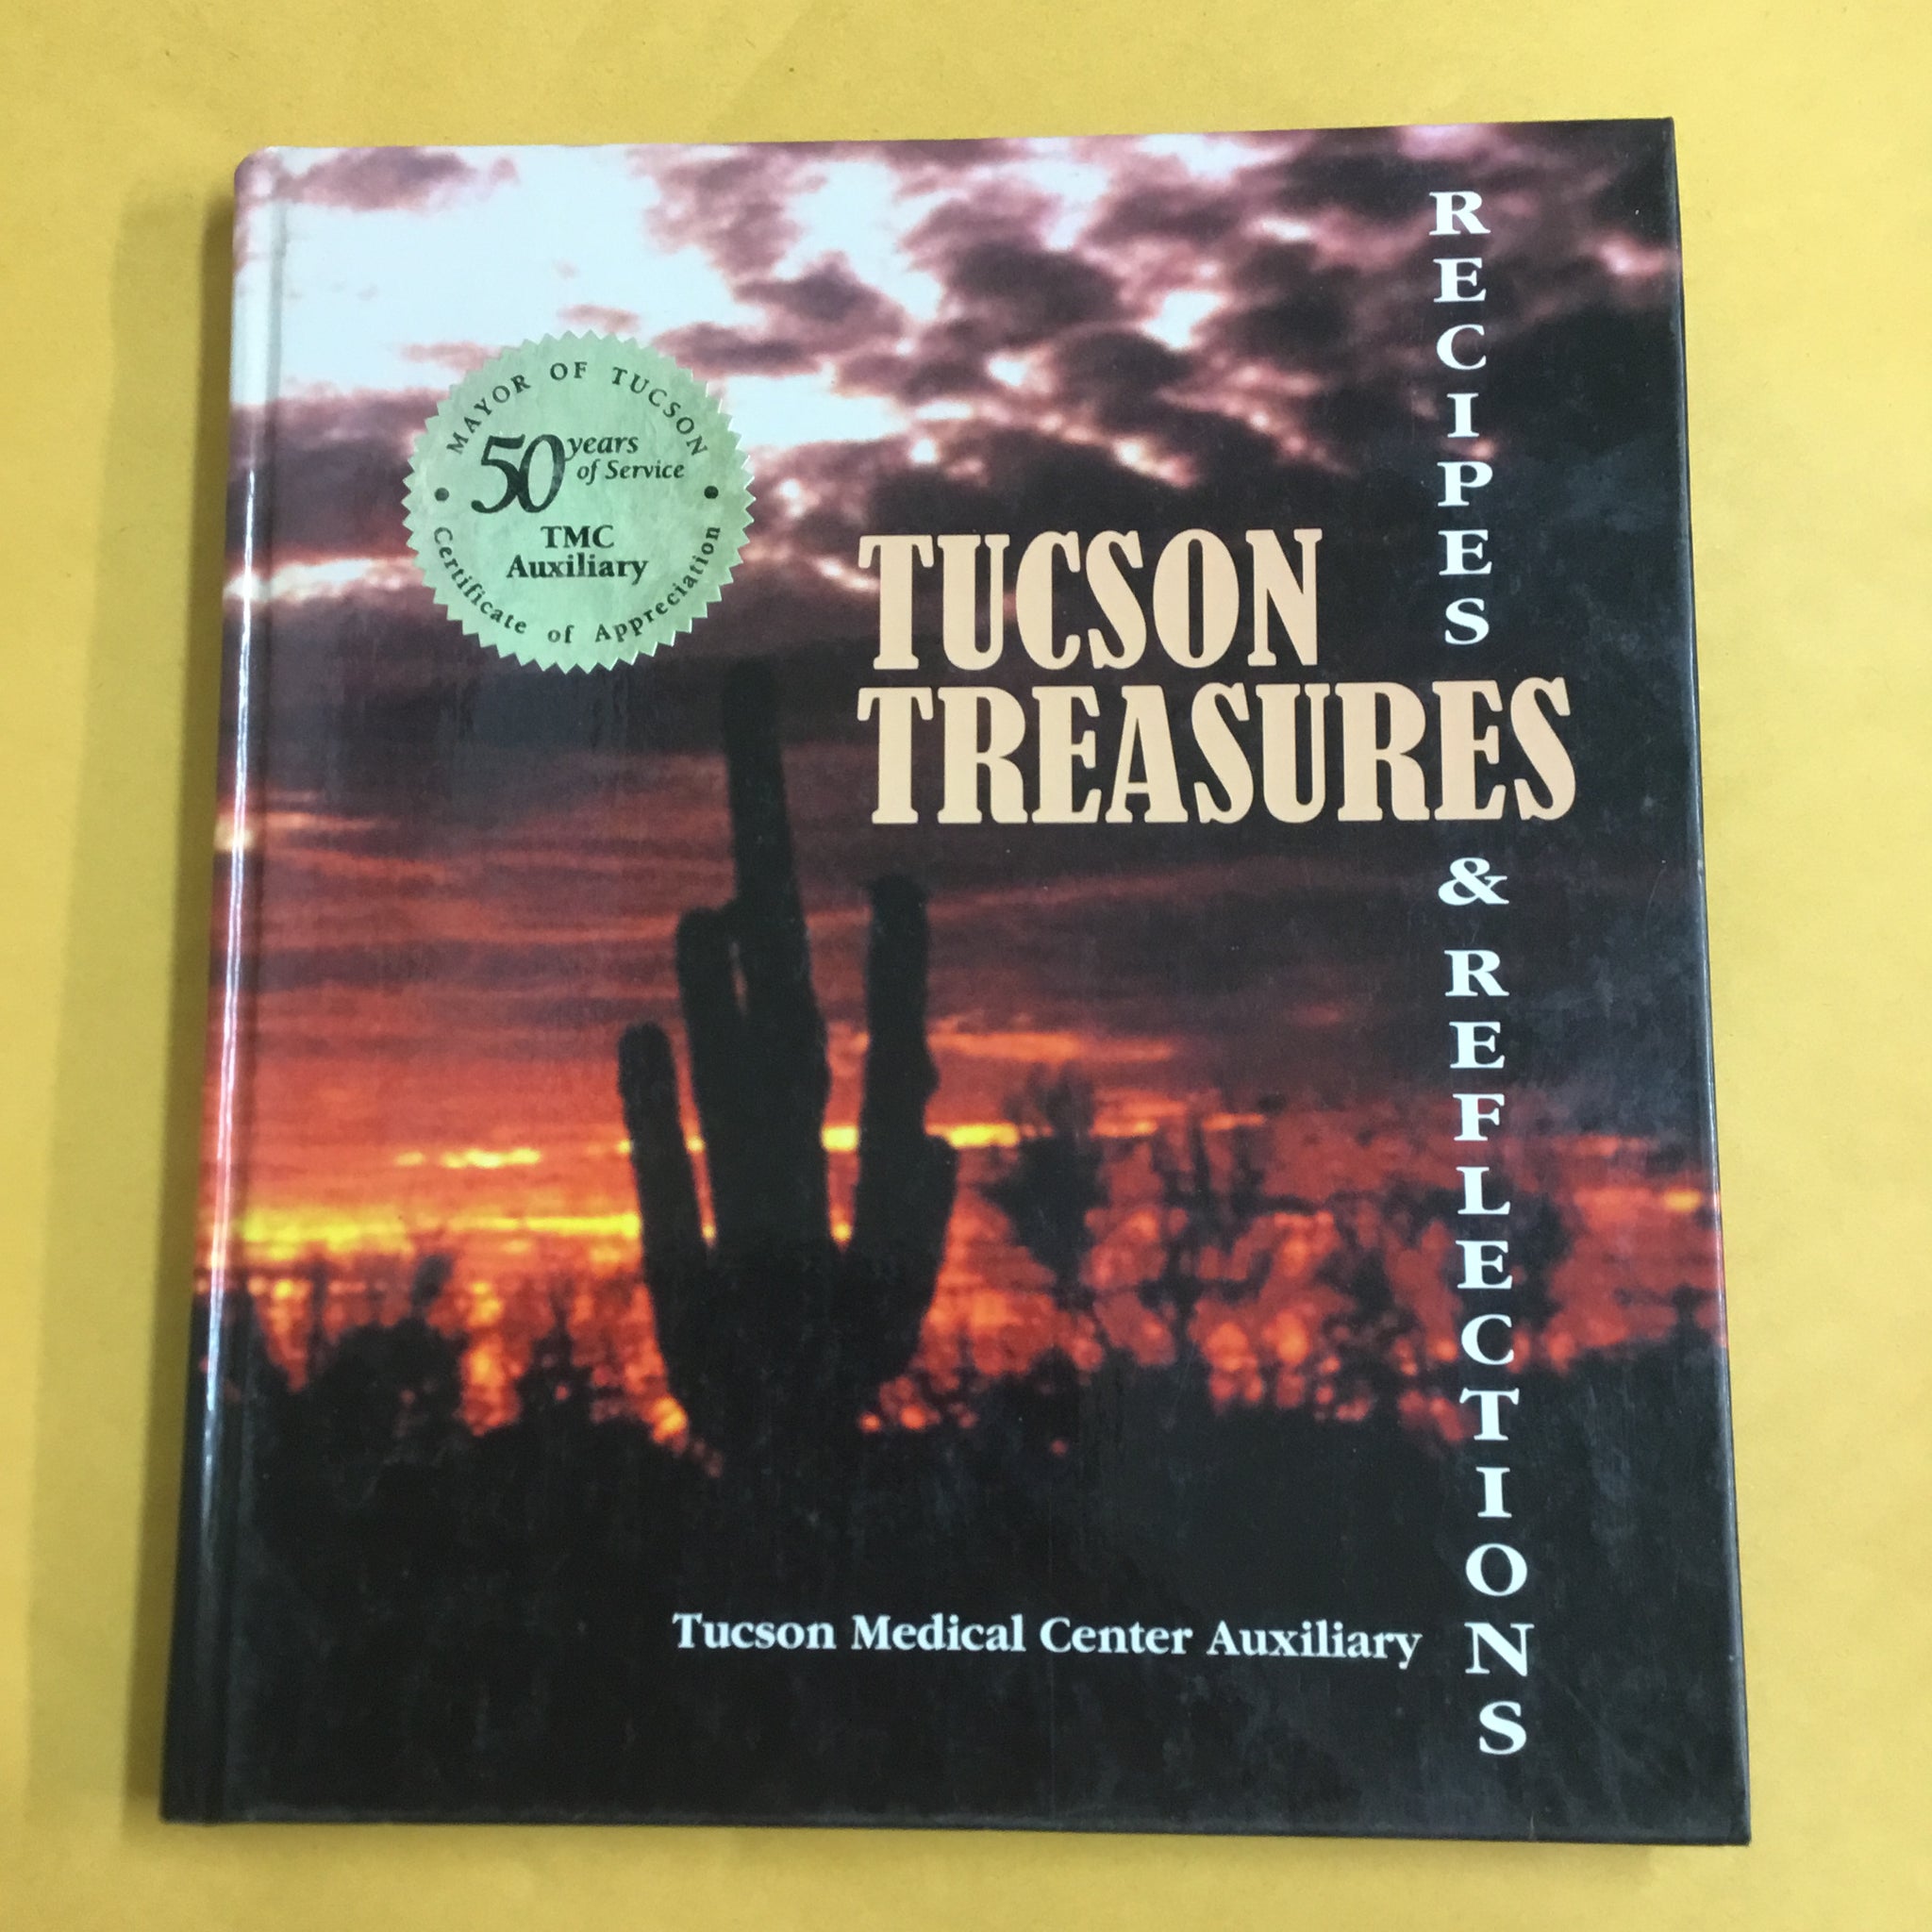 Tucson Treasures: Recipes & Reflections